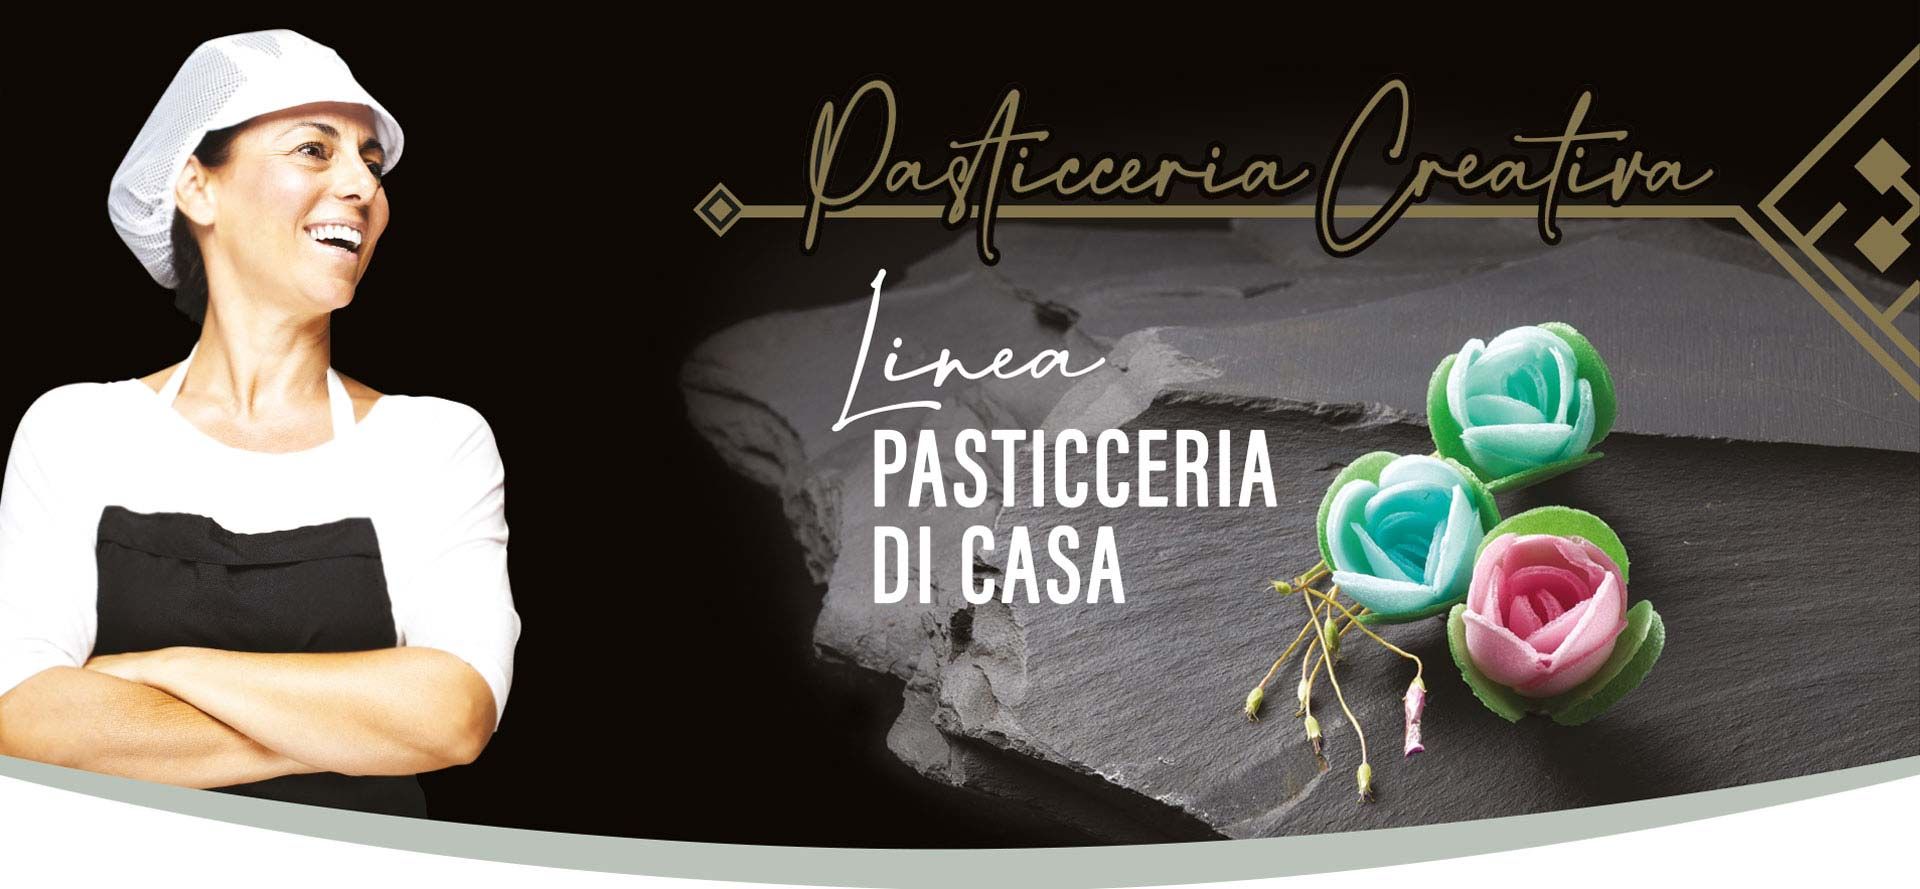 Pasticceria Creativa Linea Consumer